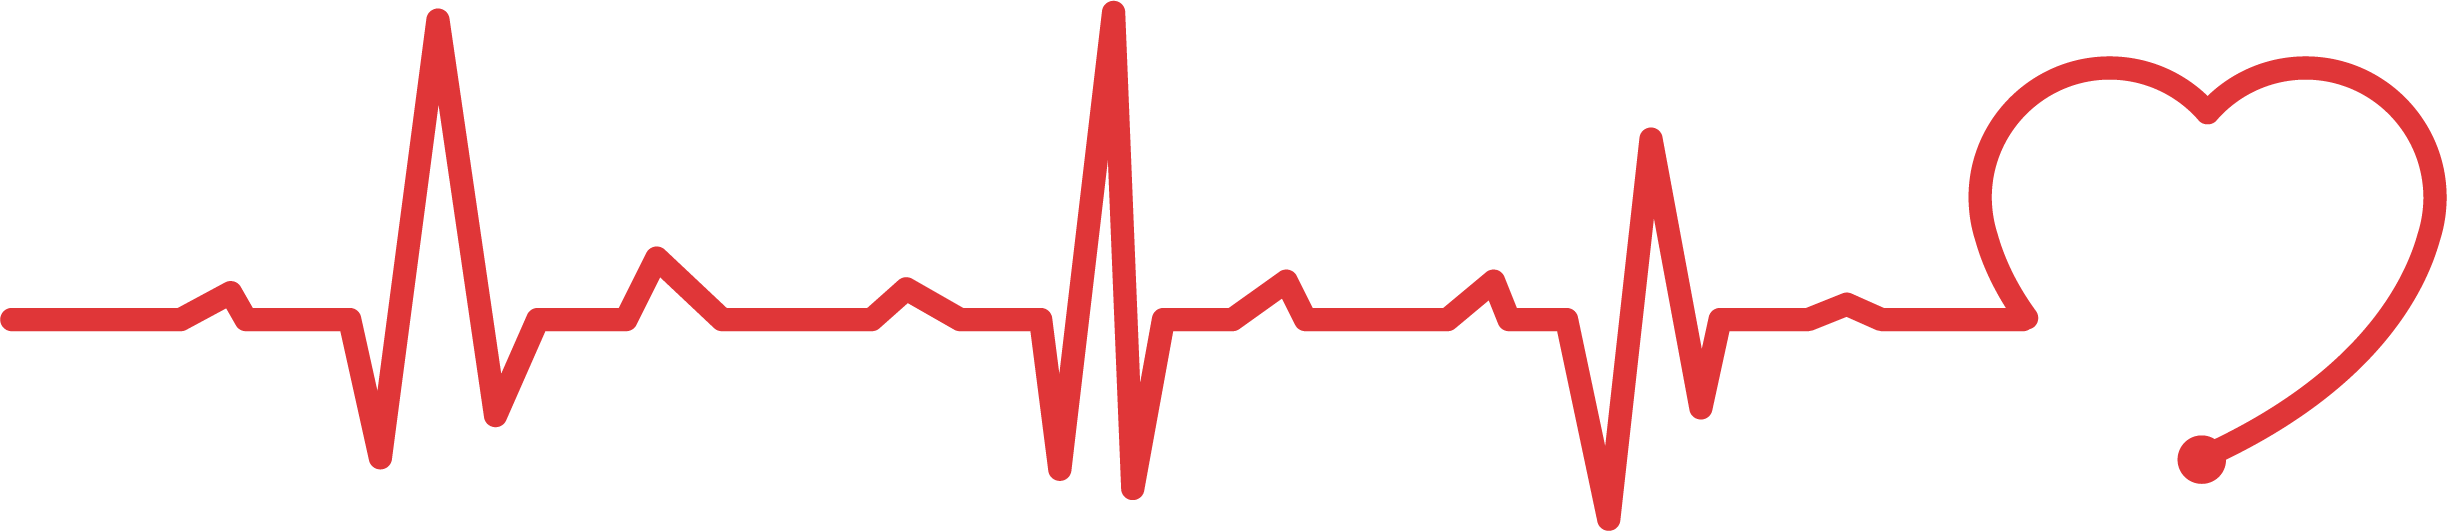 Heartbeat ECG Transparent Image